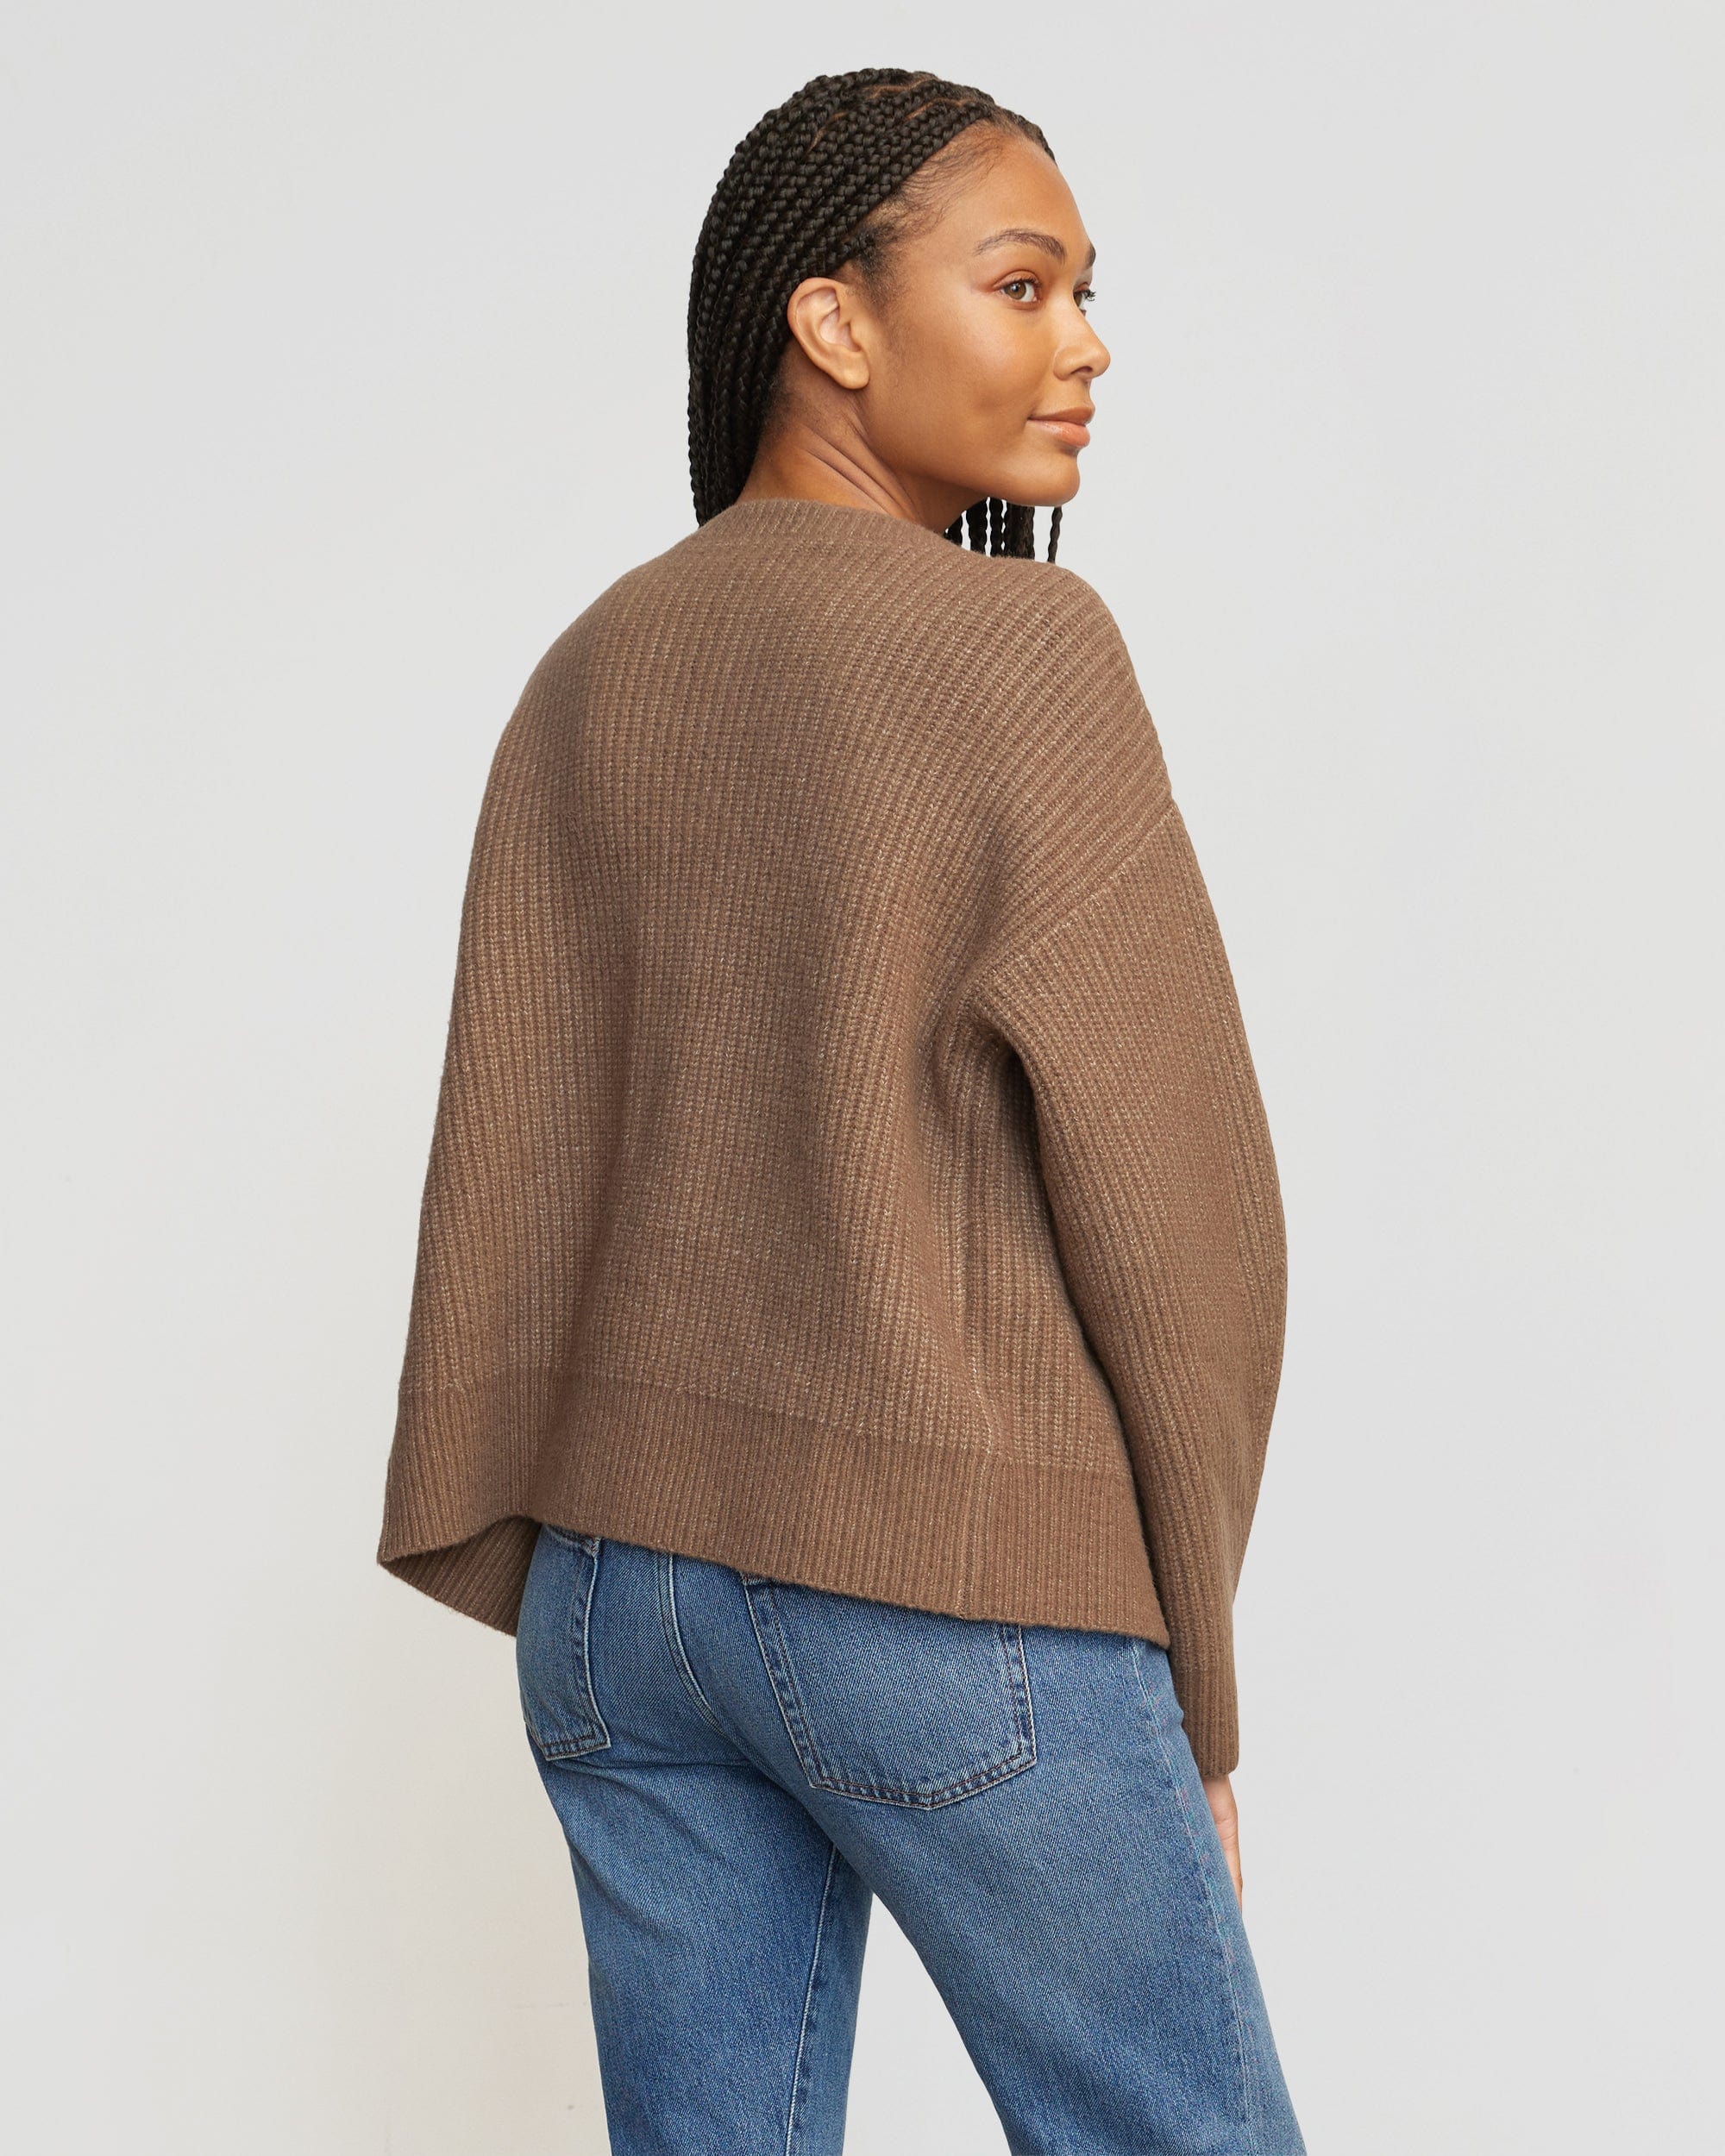 Quince Women's Heather Brown Oversized Cardigan Sweater sz XS